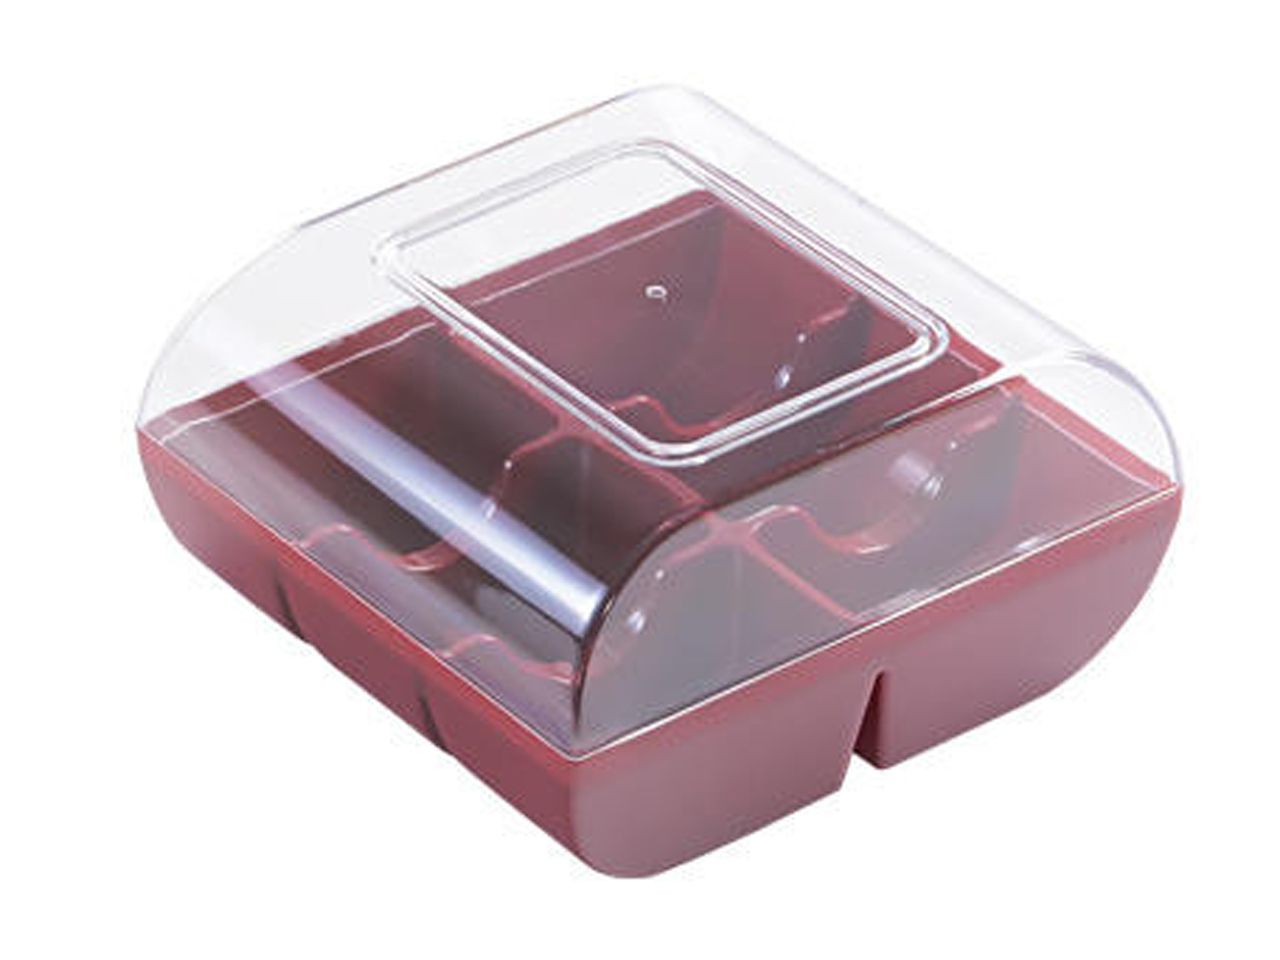 Macarons-Verpackung: Ruby, Kunststoff, Rubinrot & transparent, für 6 Macarons, 9,9 x 9,4 x 5,3 cm